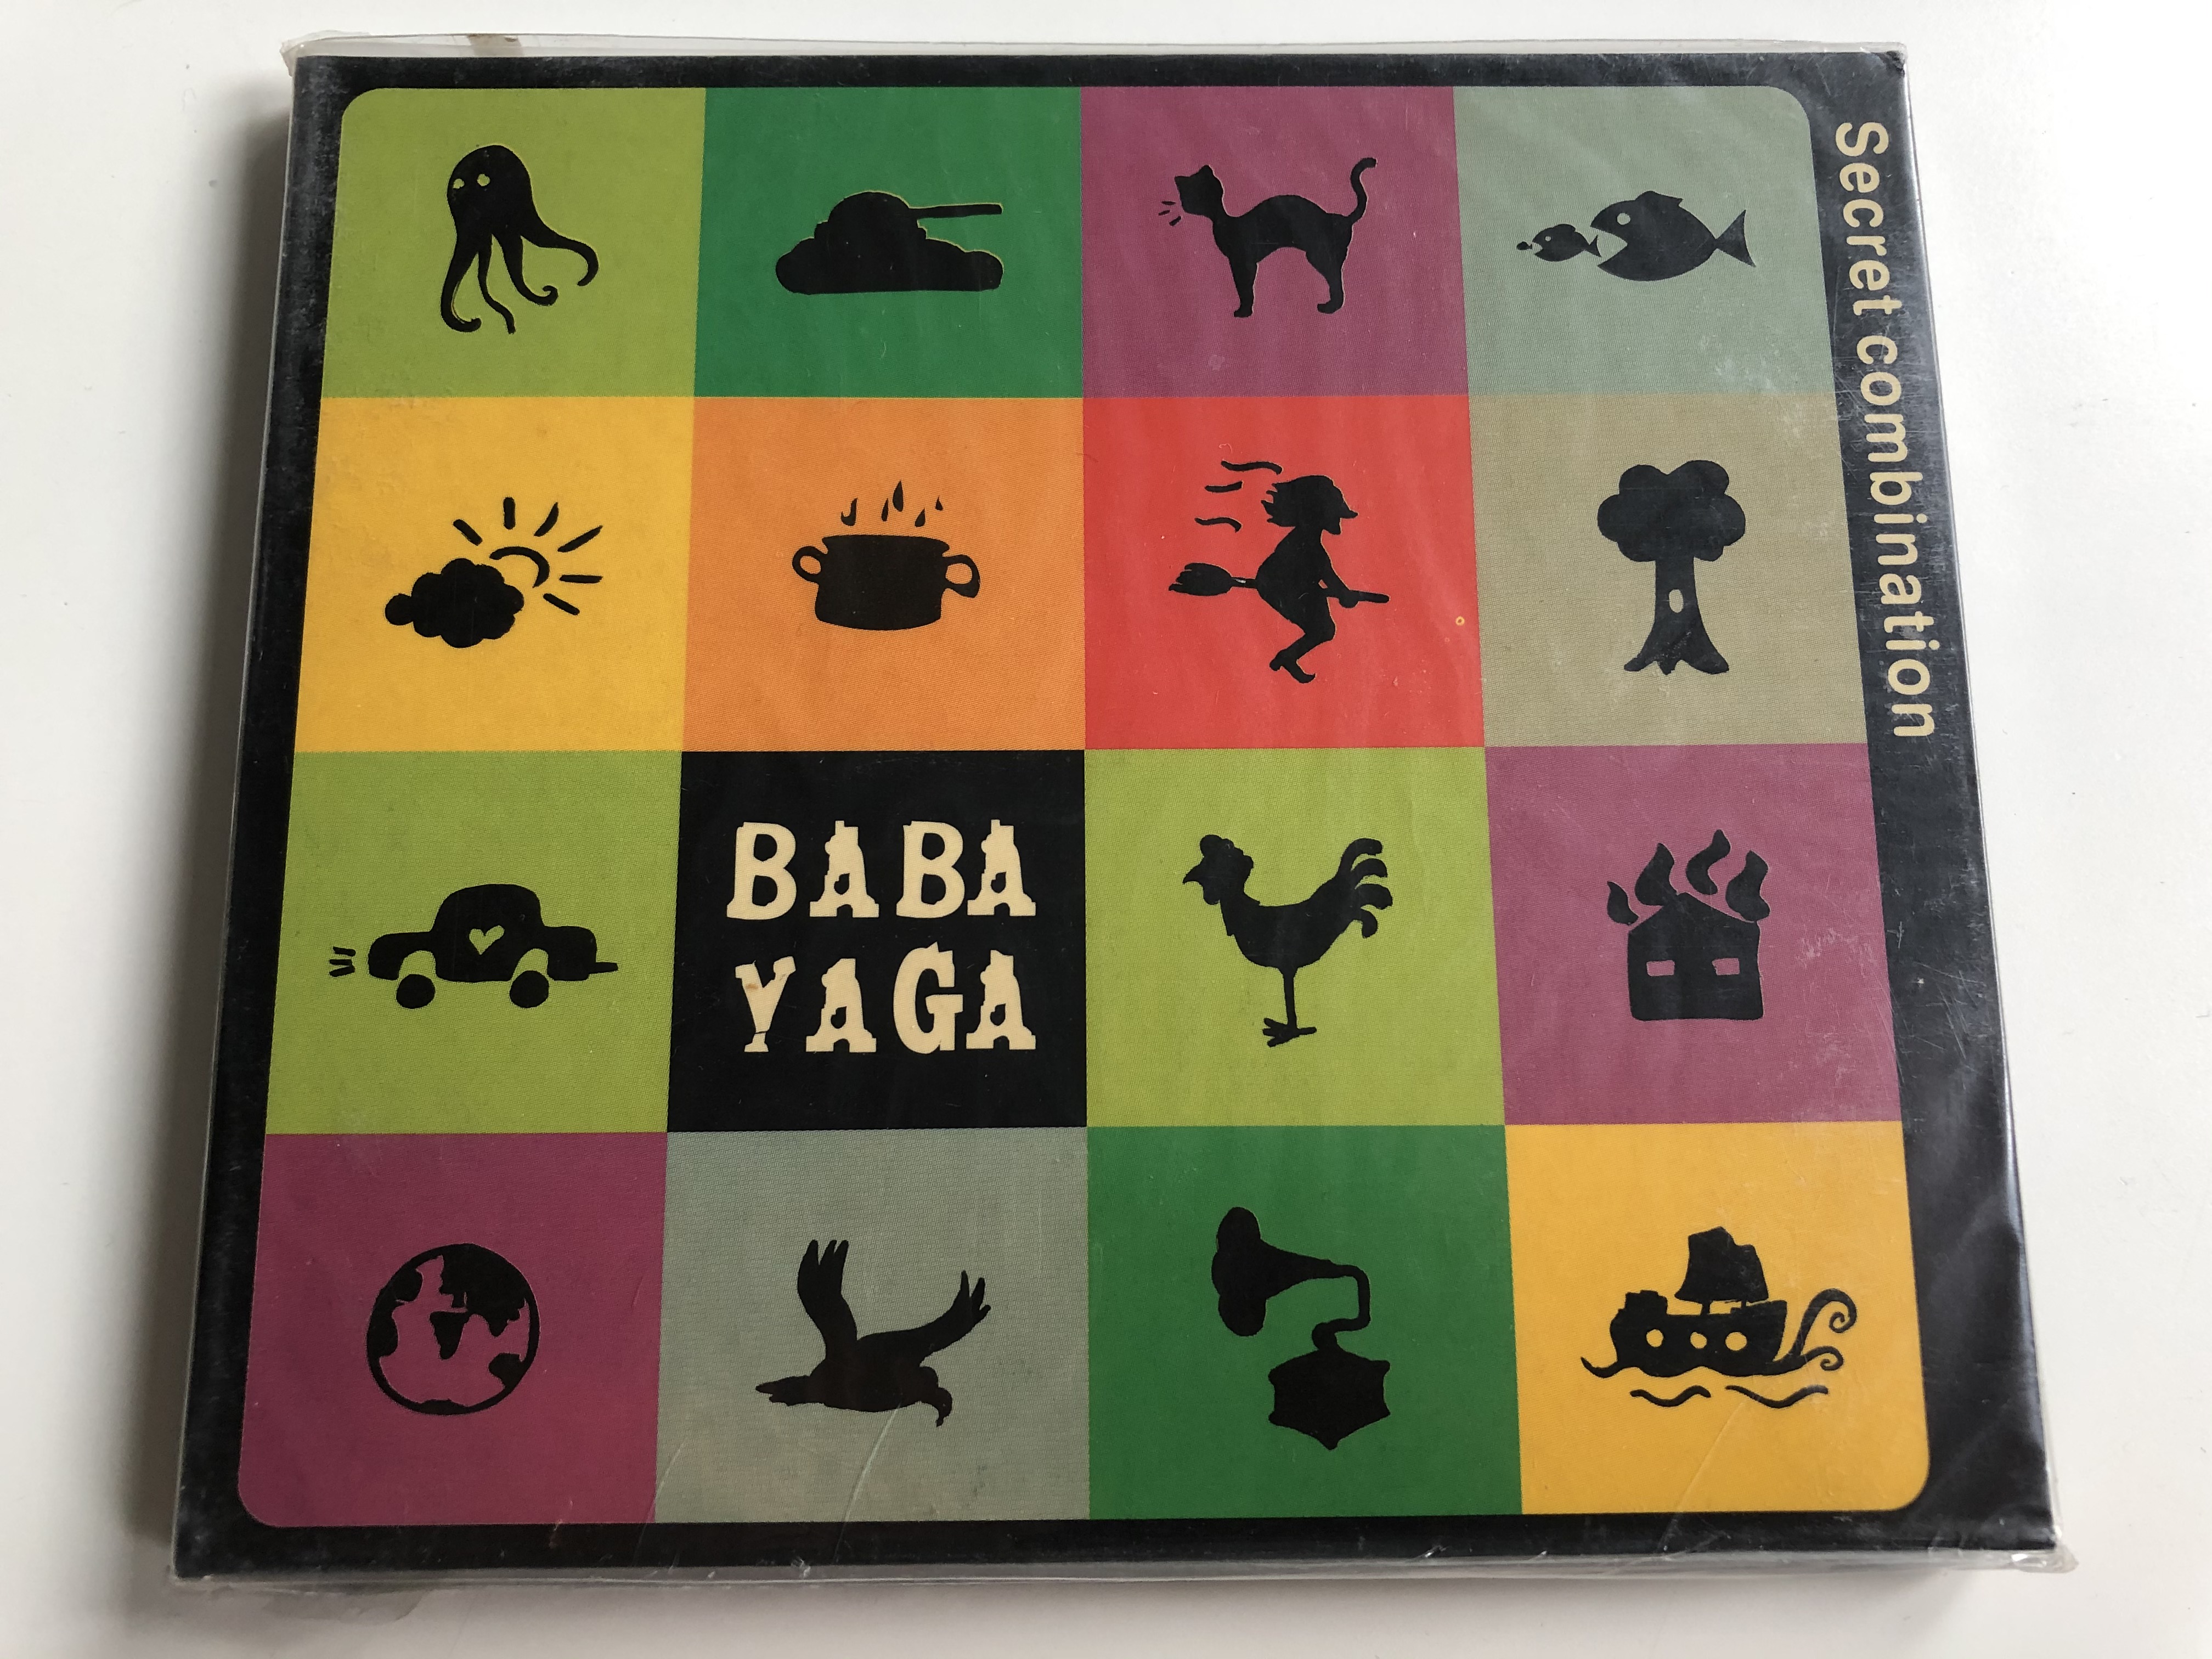 baba-yaga-secret-combination-fon-records-audio-cd-2002-fa-099-2-1-.jpg